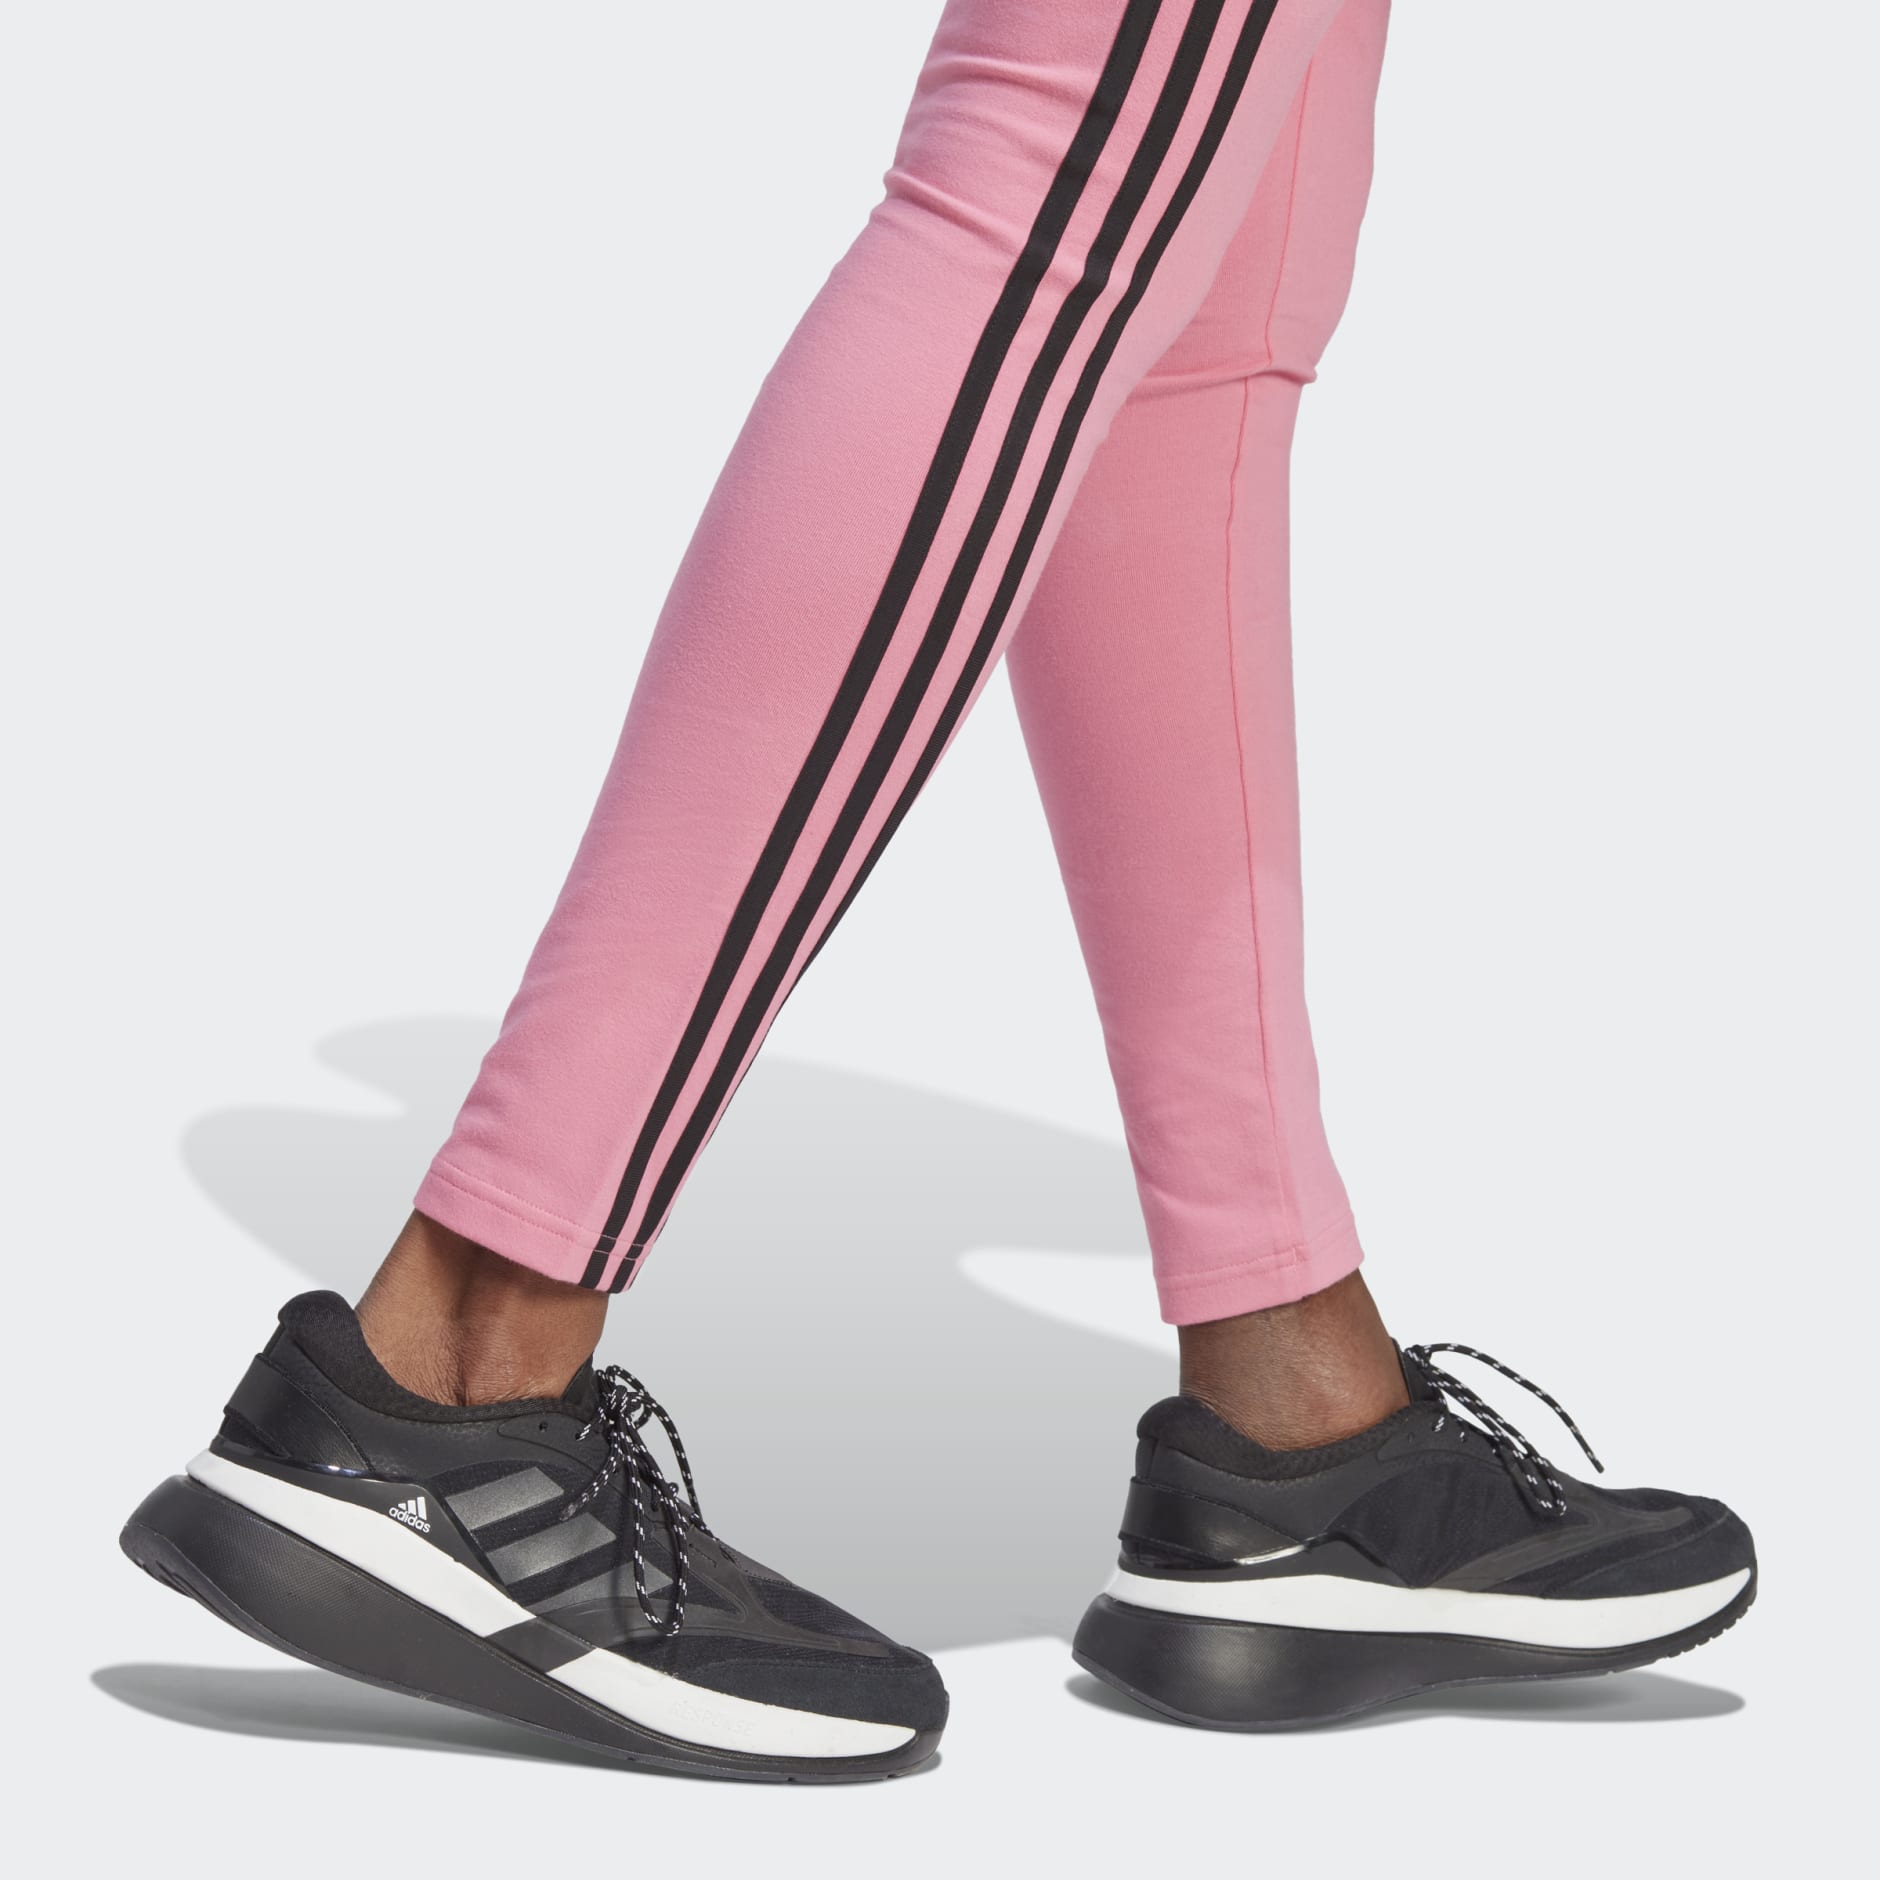 Adidas Originals 3-Stripes Embroidery Women's Leggings Pink HM1307 Sale!!